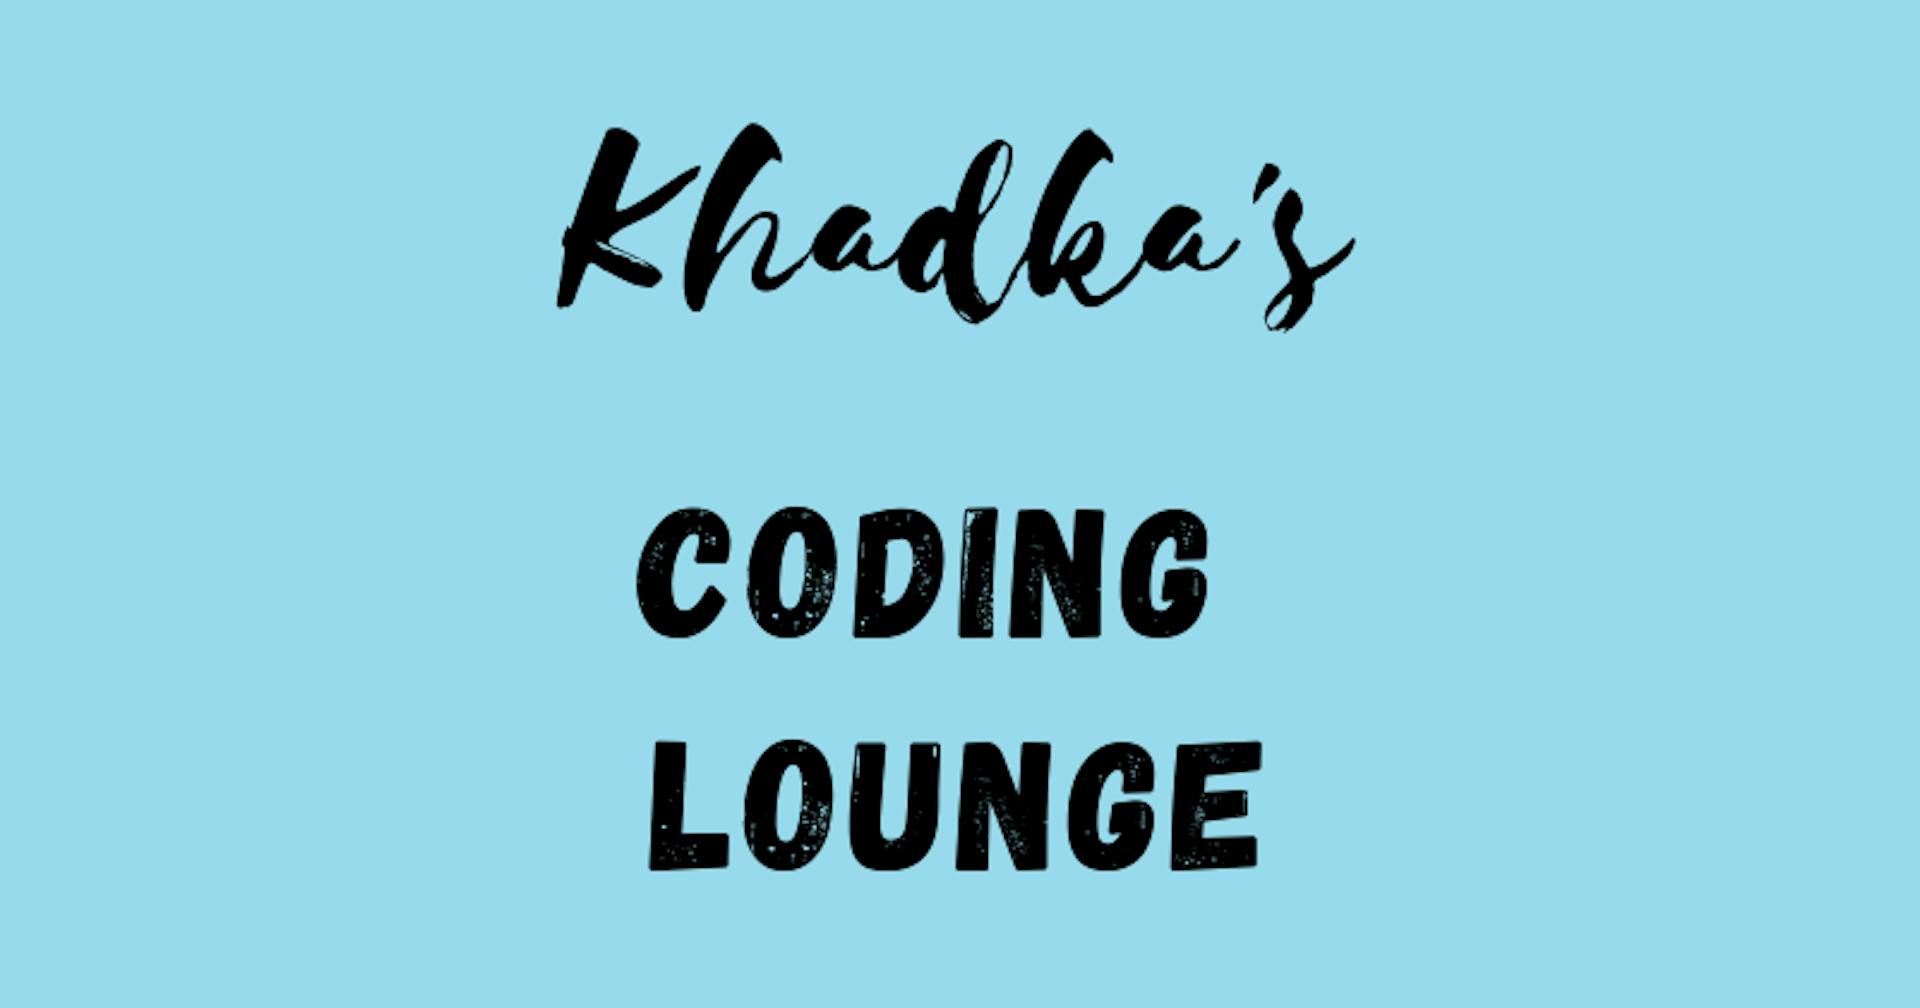 Blog By Khadka's Coding Lounge